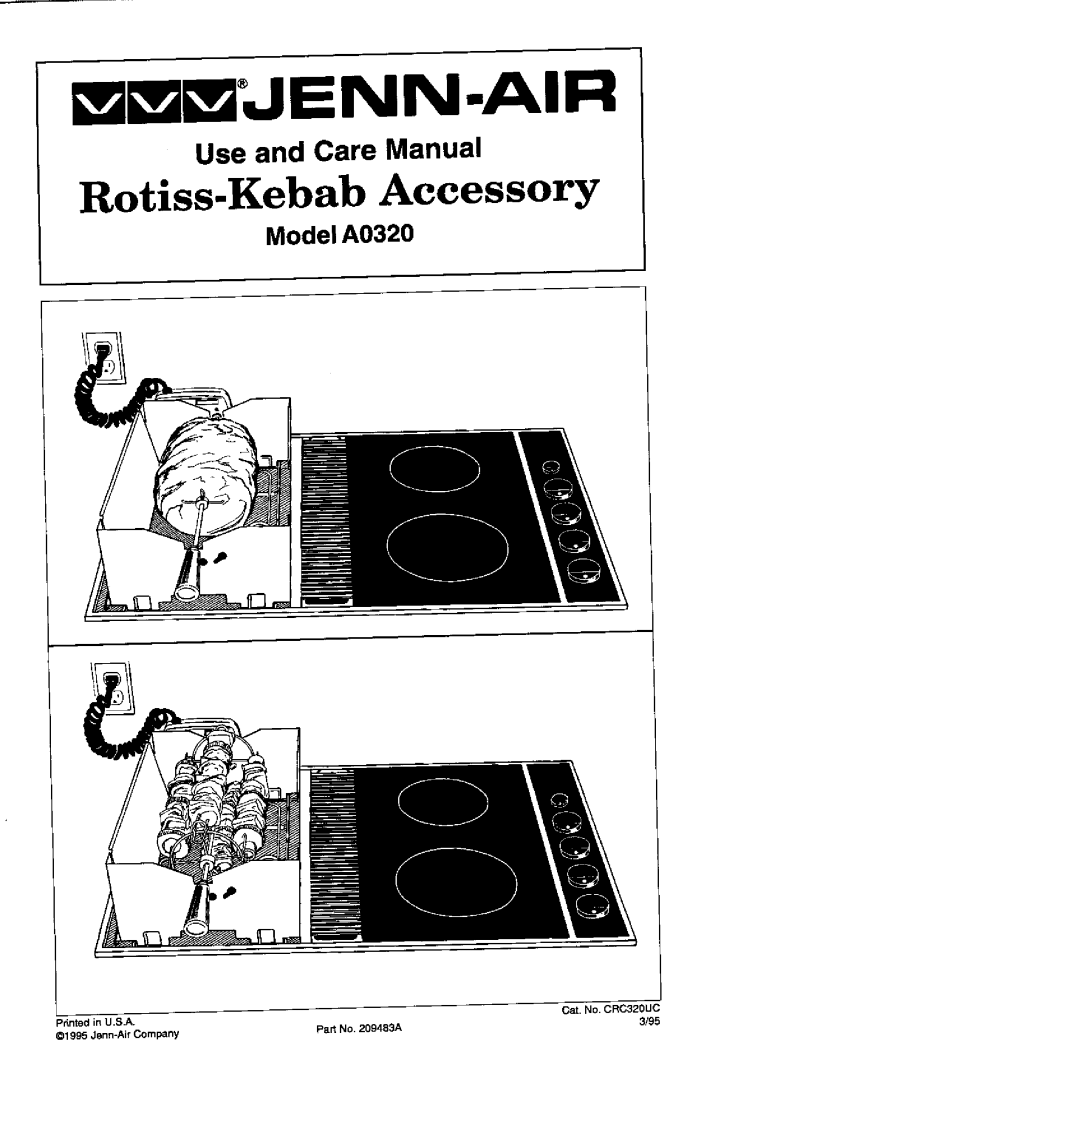 Jenn-Air manual mJENN-AIR, Rotiss-KebabAccessory, Use and Care Manual, Model A0320, prLntedin U.S.A, Cat. No. CRC320UC 